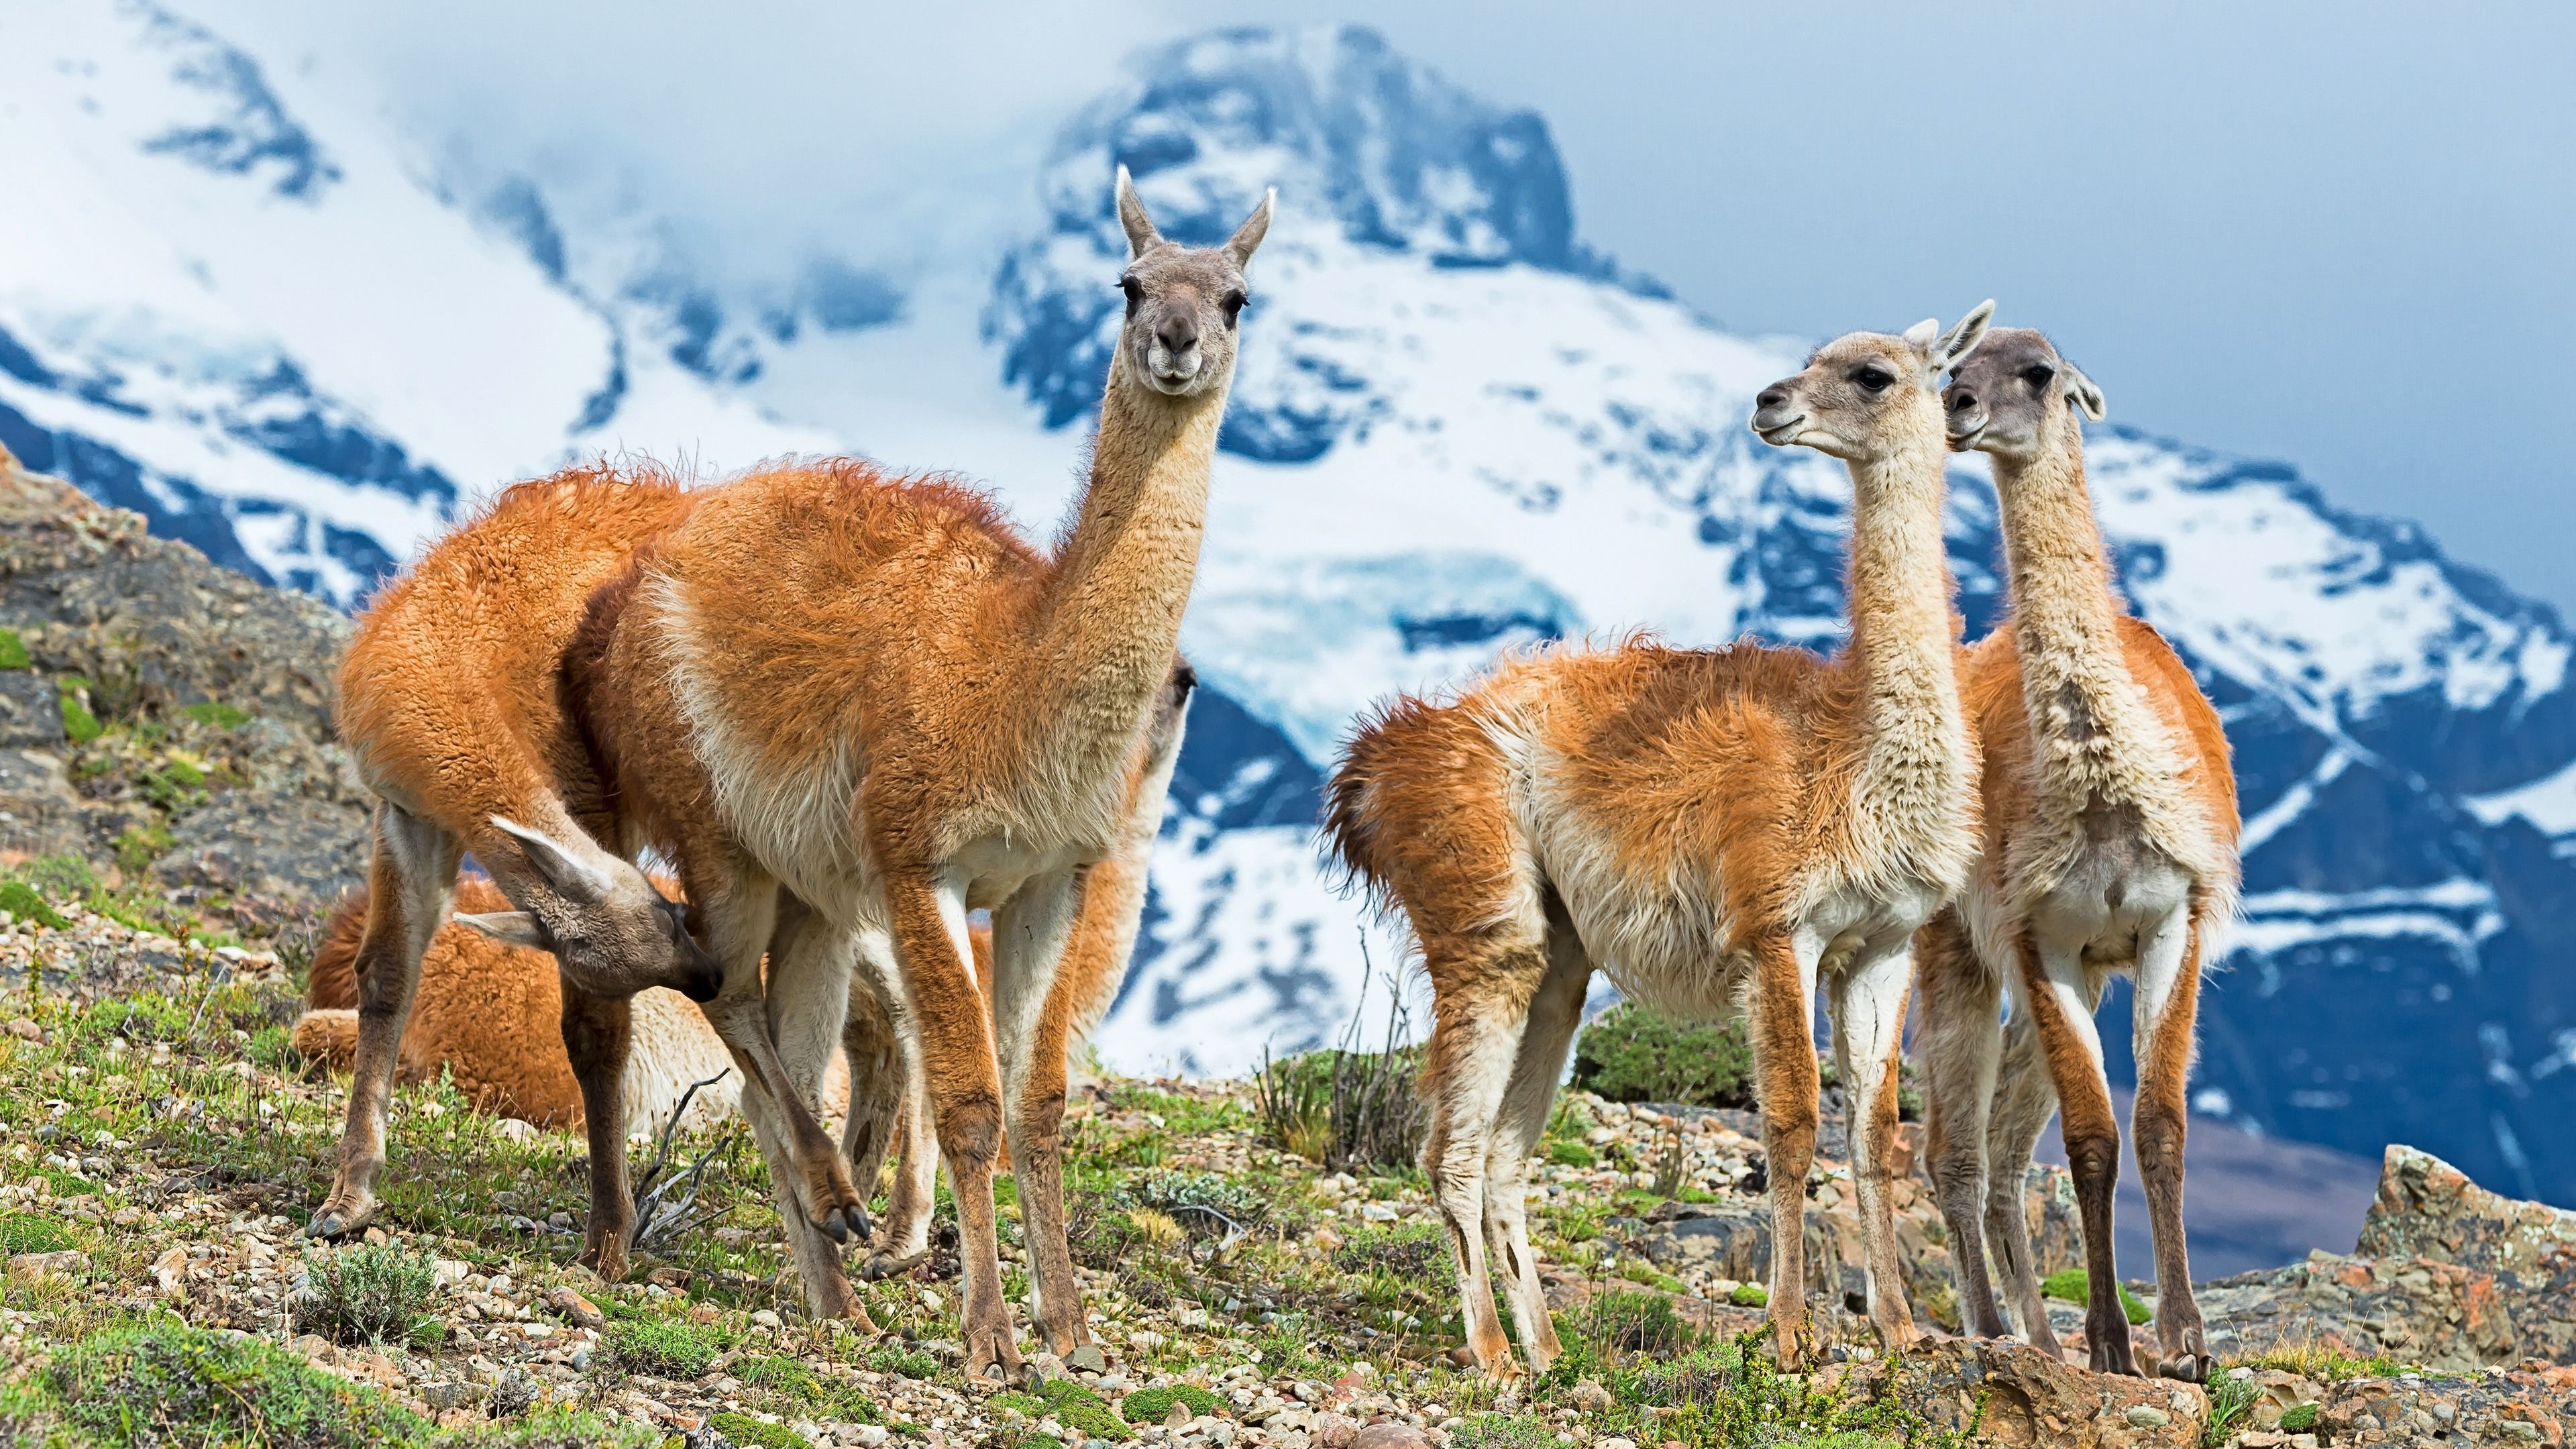  Alpaka Hintergrundbild 3840x2160. Alpaka, Berge, Schnee 3840x2160 UHD 4K Hintergrundbilder, HD, Bild